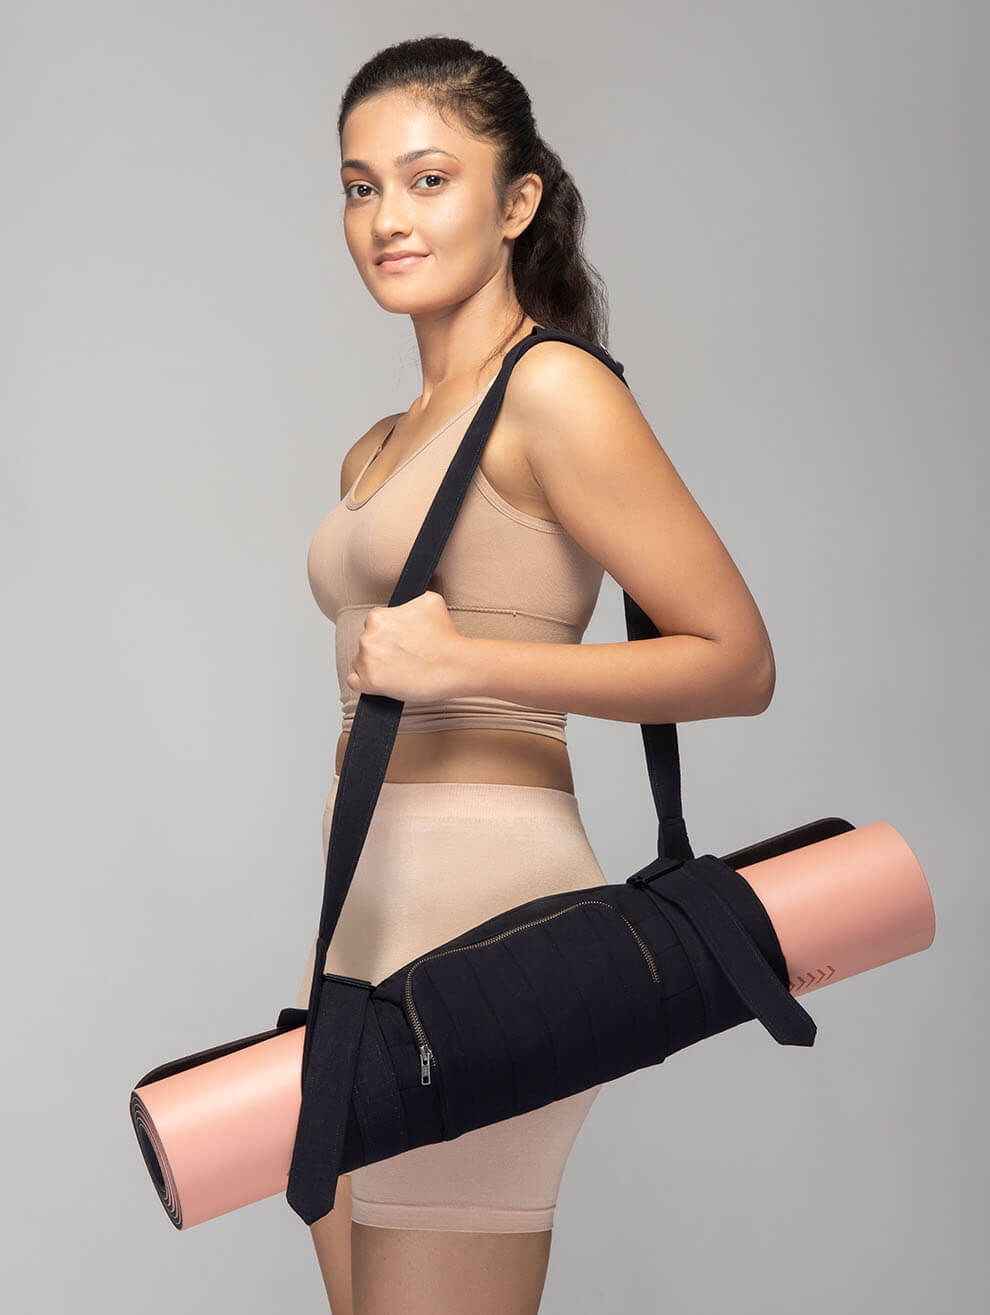 Yoga Mat Bags  Buy Best Yoga Mat Bags & Carrier Online - Core